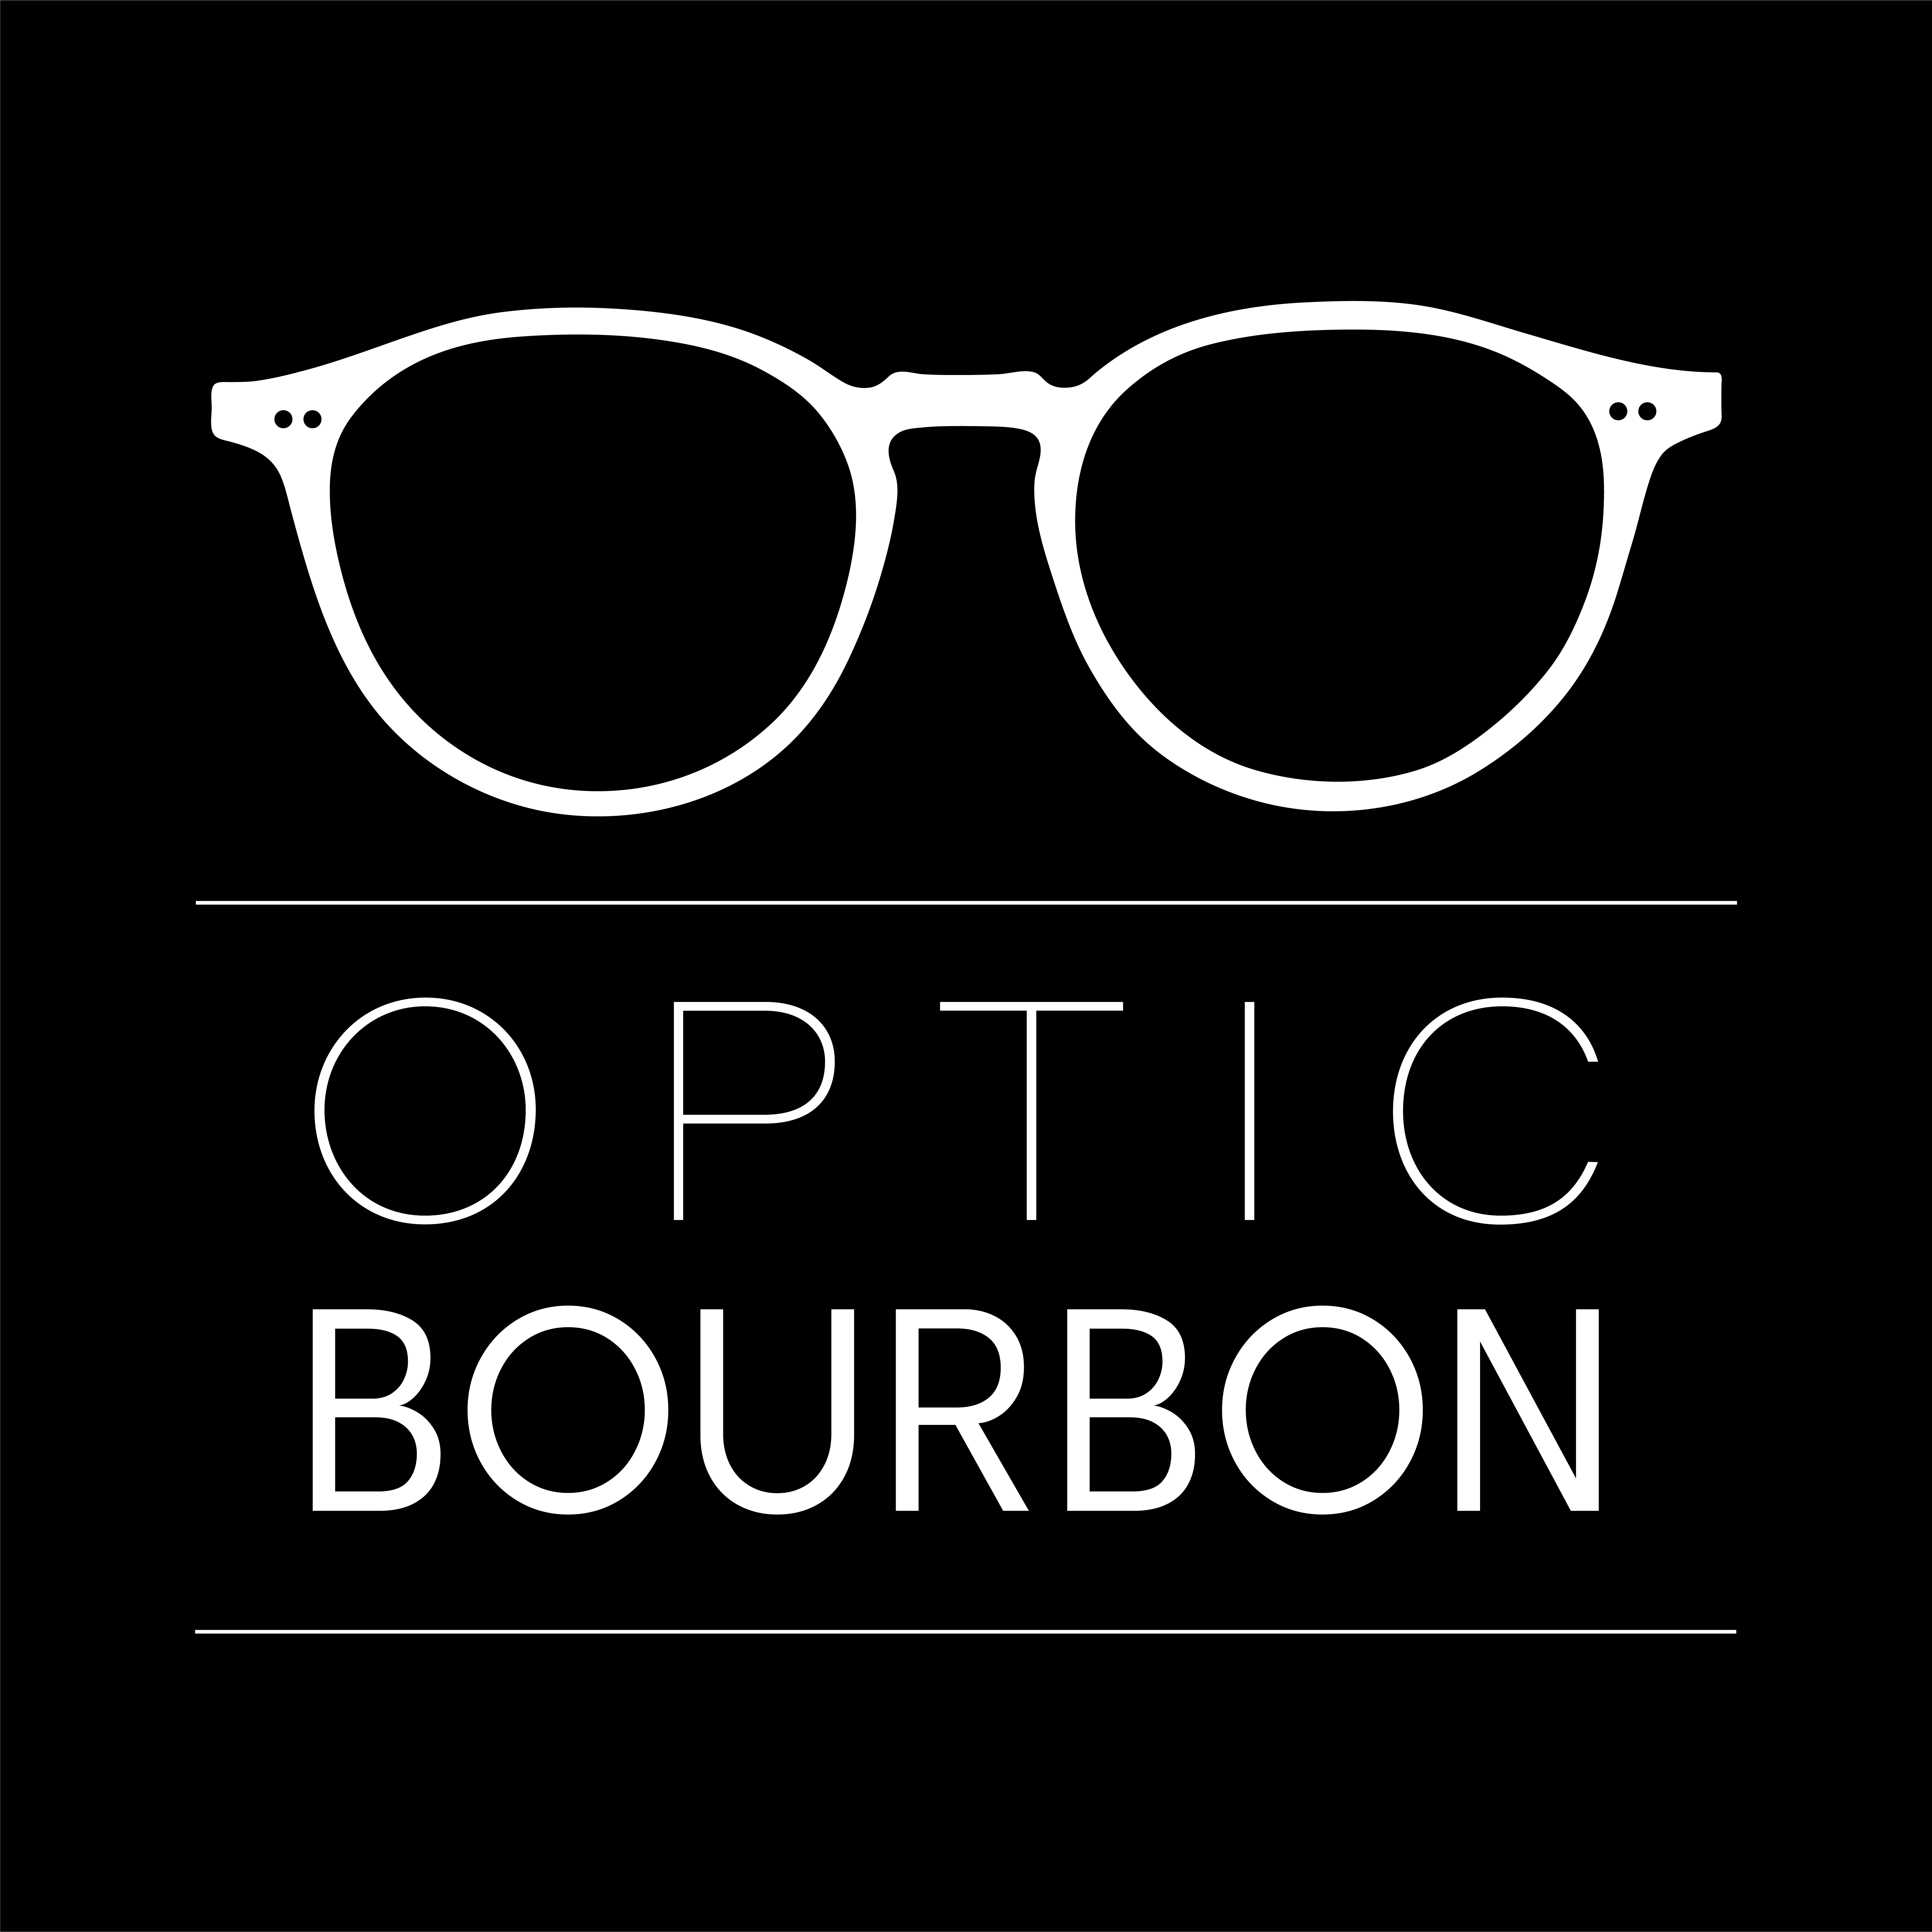 Optic Bourbon